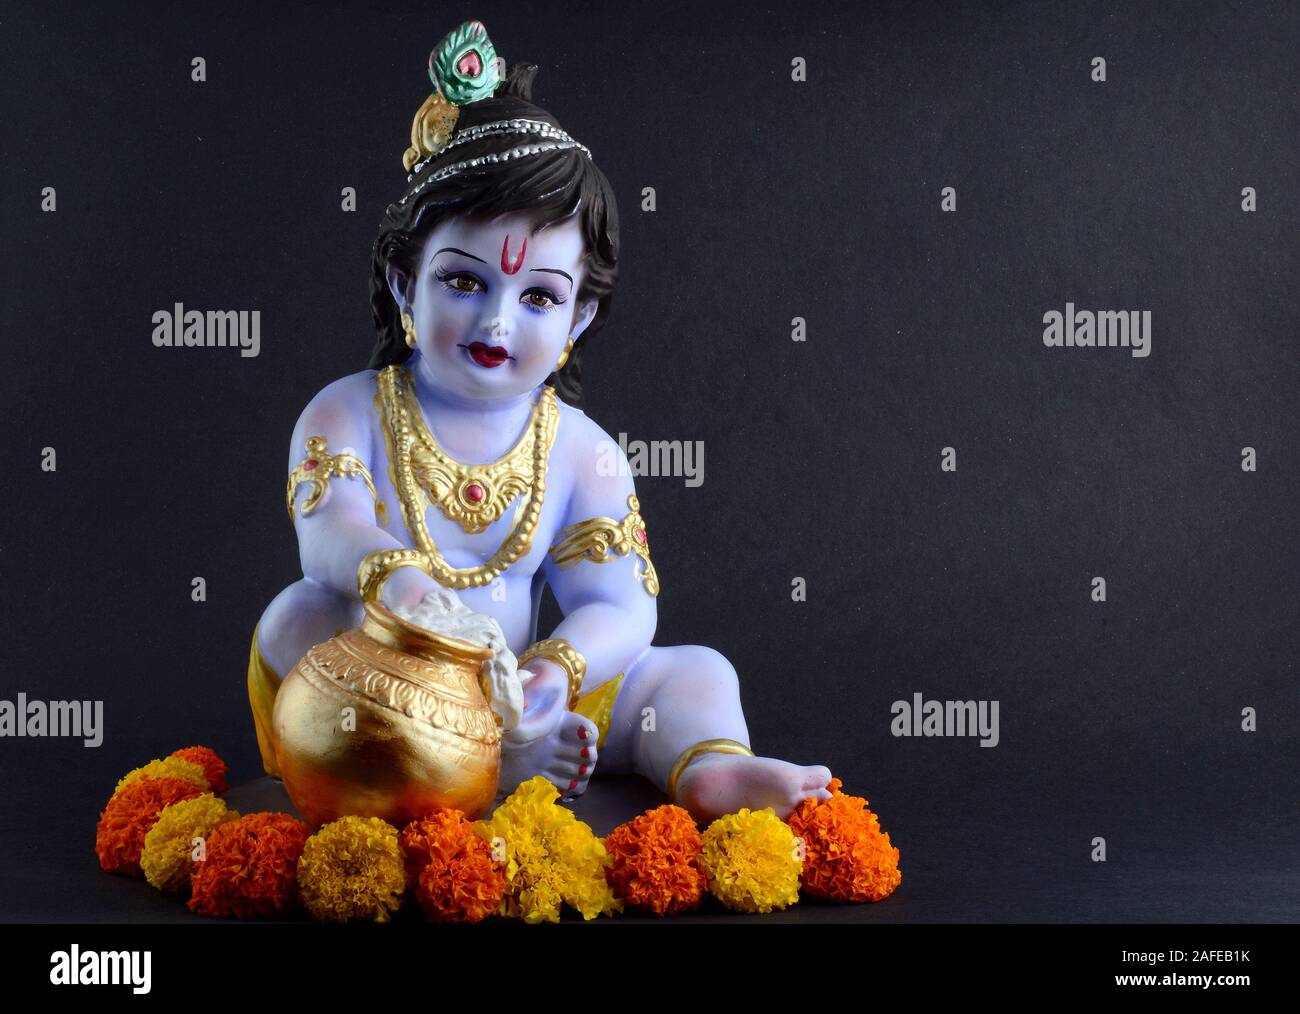 Hindu God Krishna on dark background Stock Photo - Alamy